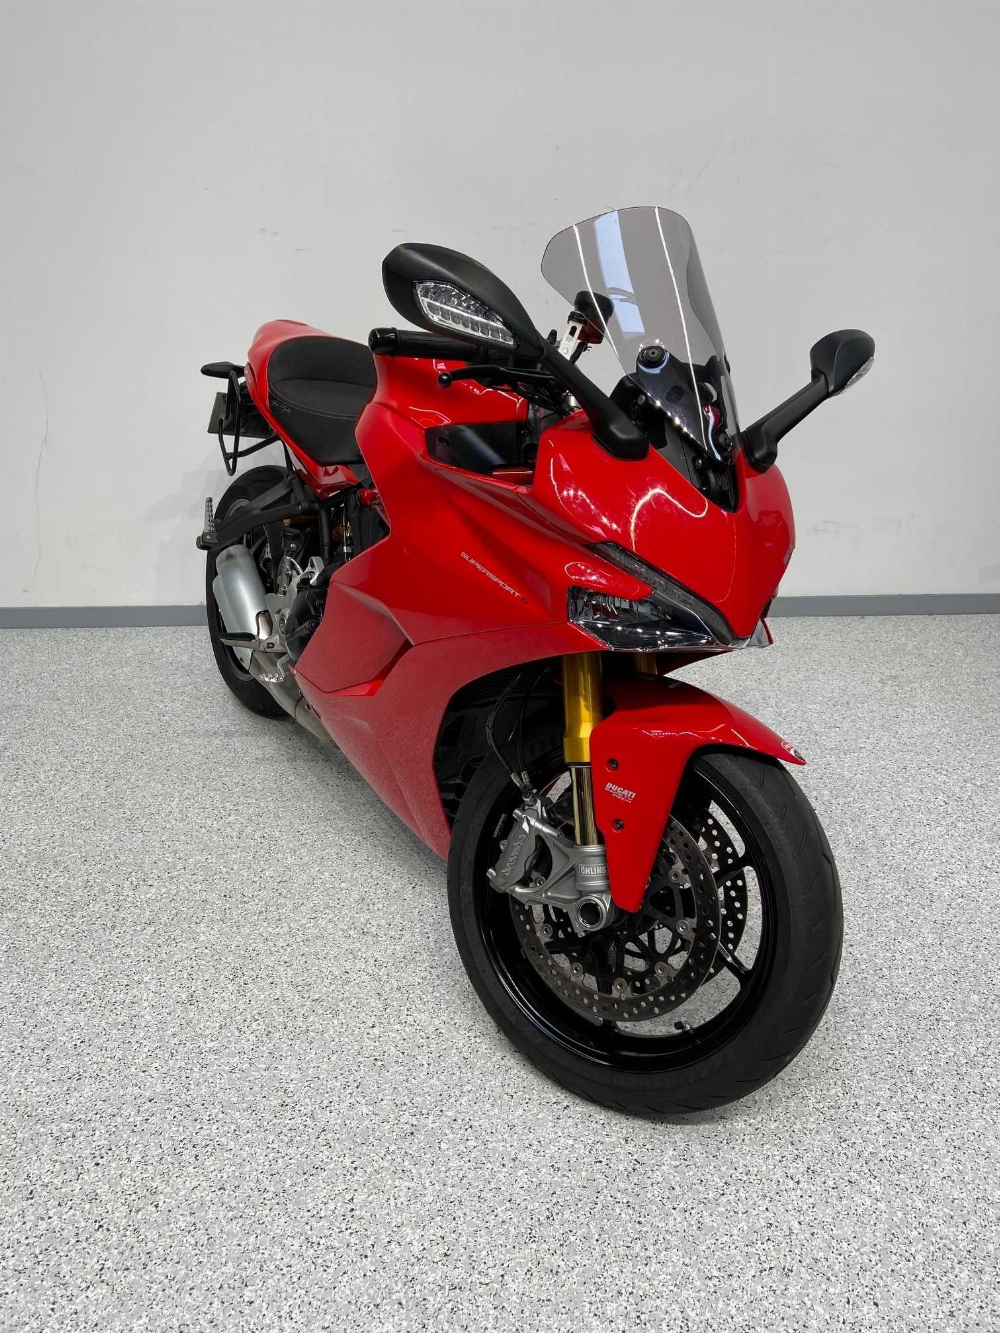 Ducati 939 Supersport 2020 vue 3/4 droite